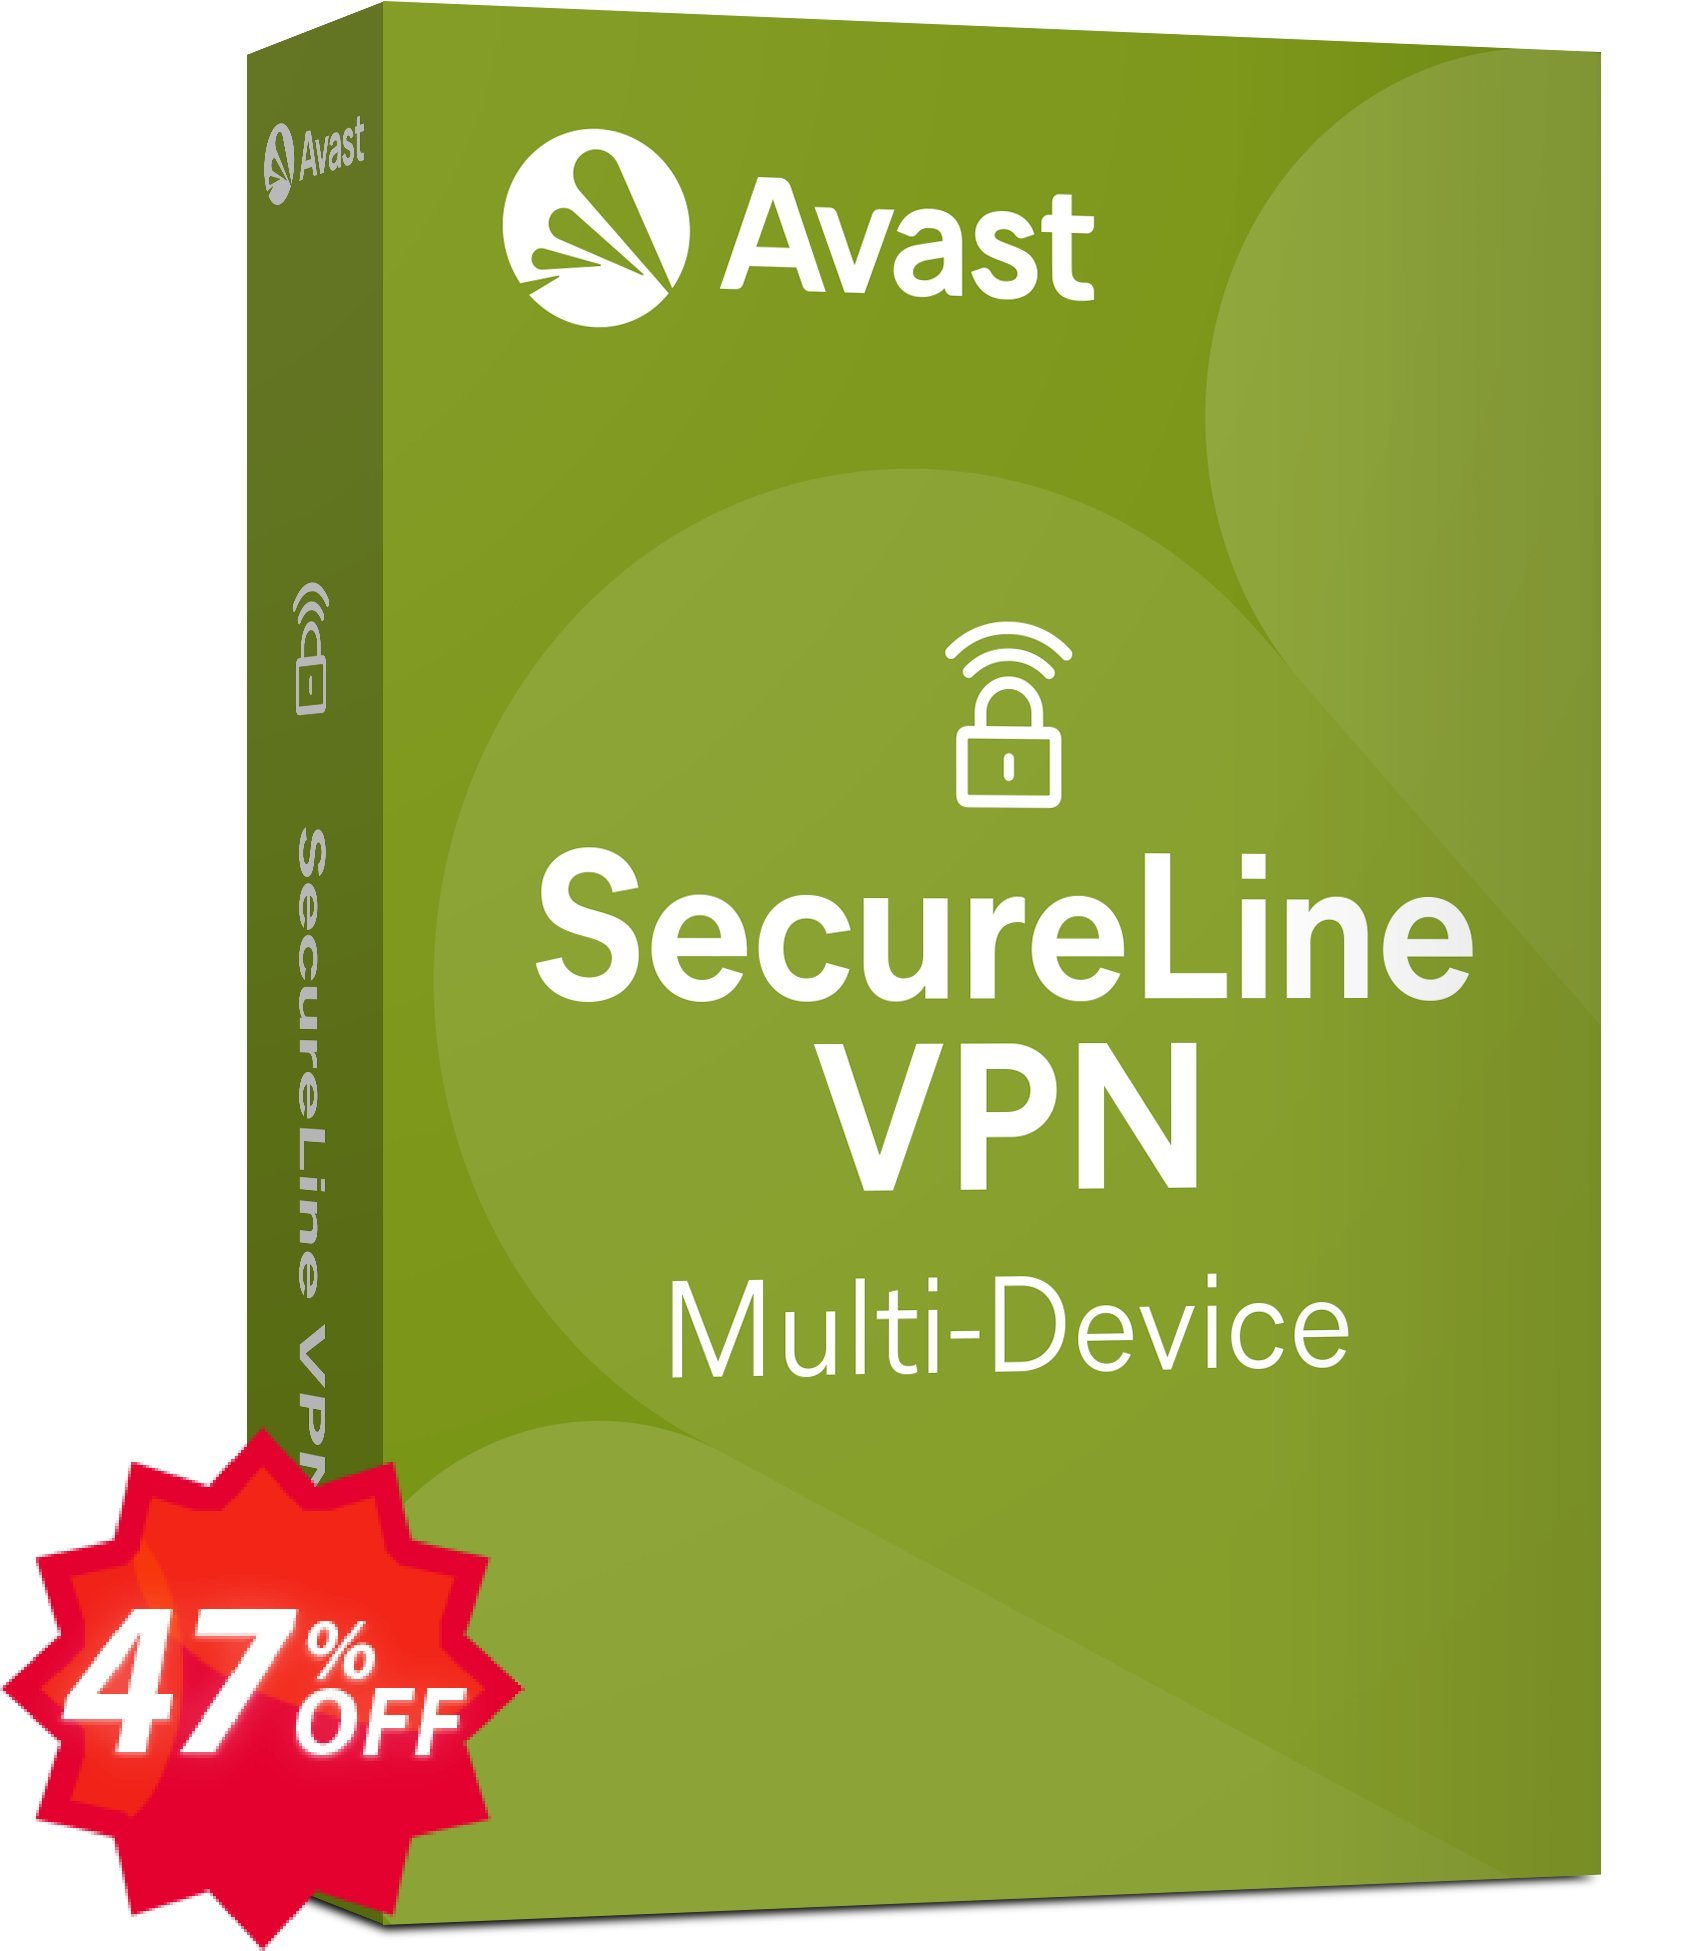 Avast SecureLine VPN, 3 years  Coupon code 47% discount 